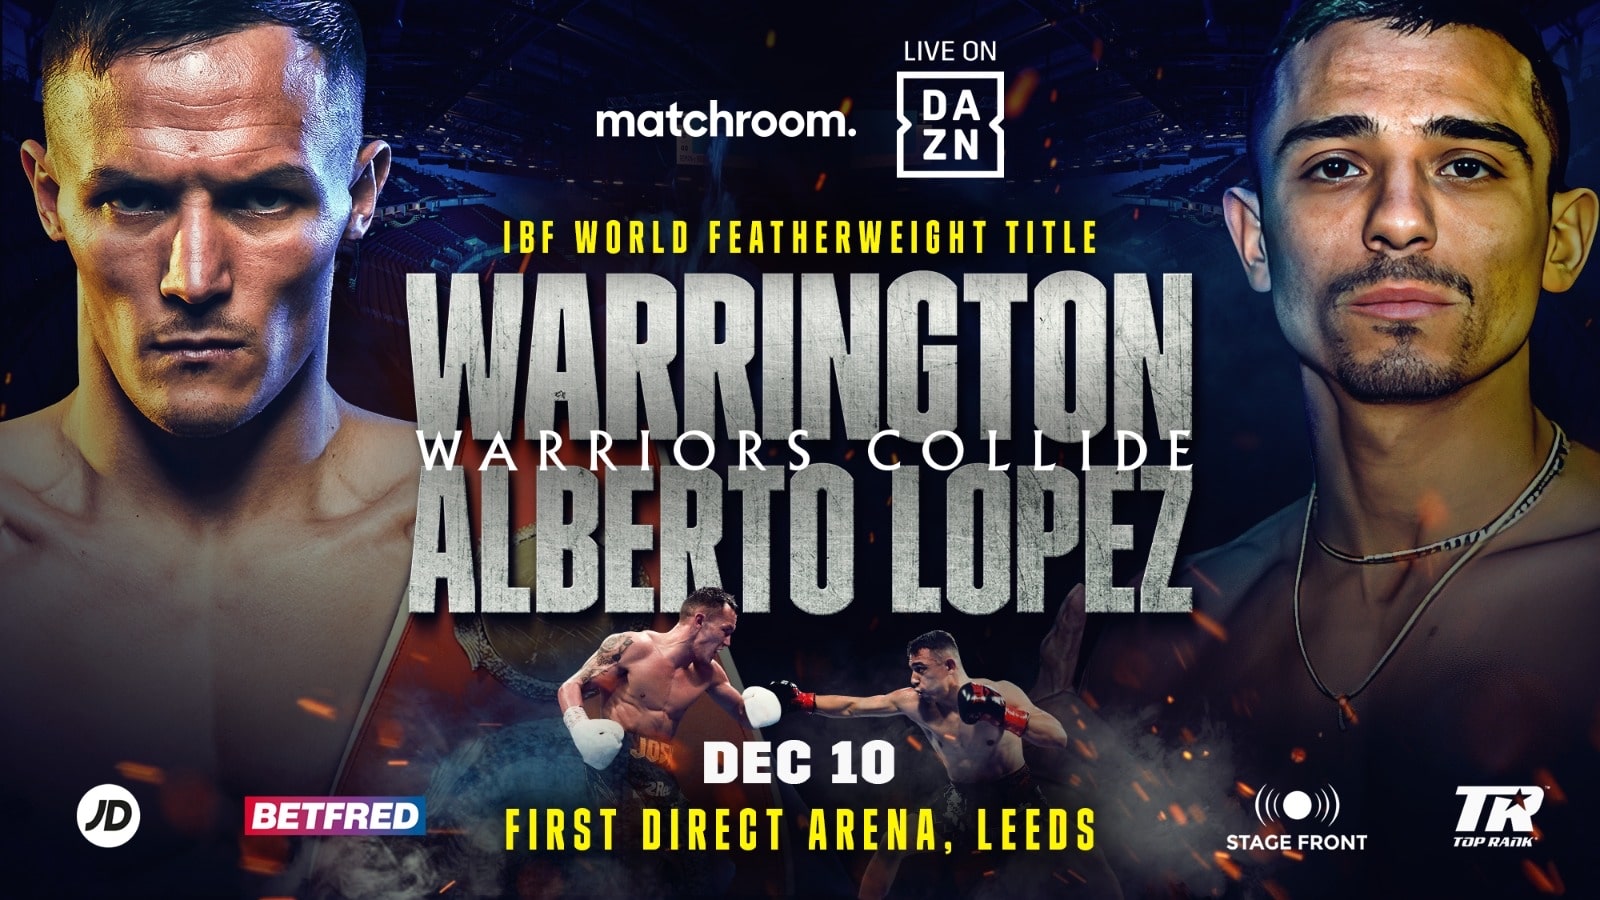 Josh Warrington vs. Luis Alberto Lopez: Will headbutts come into play on Saturday?